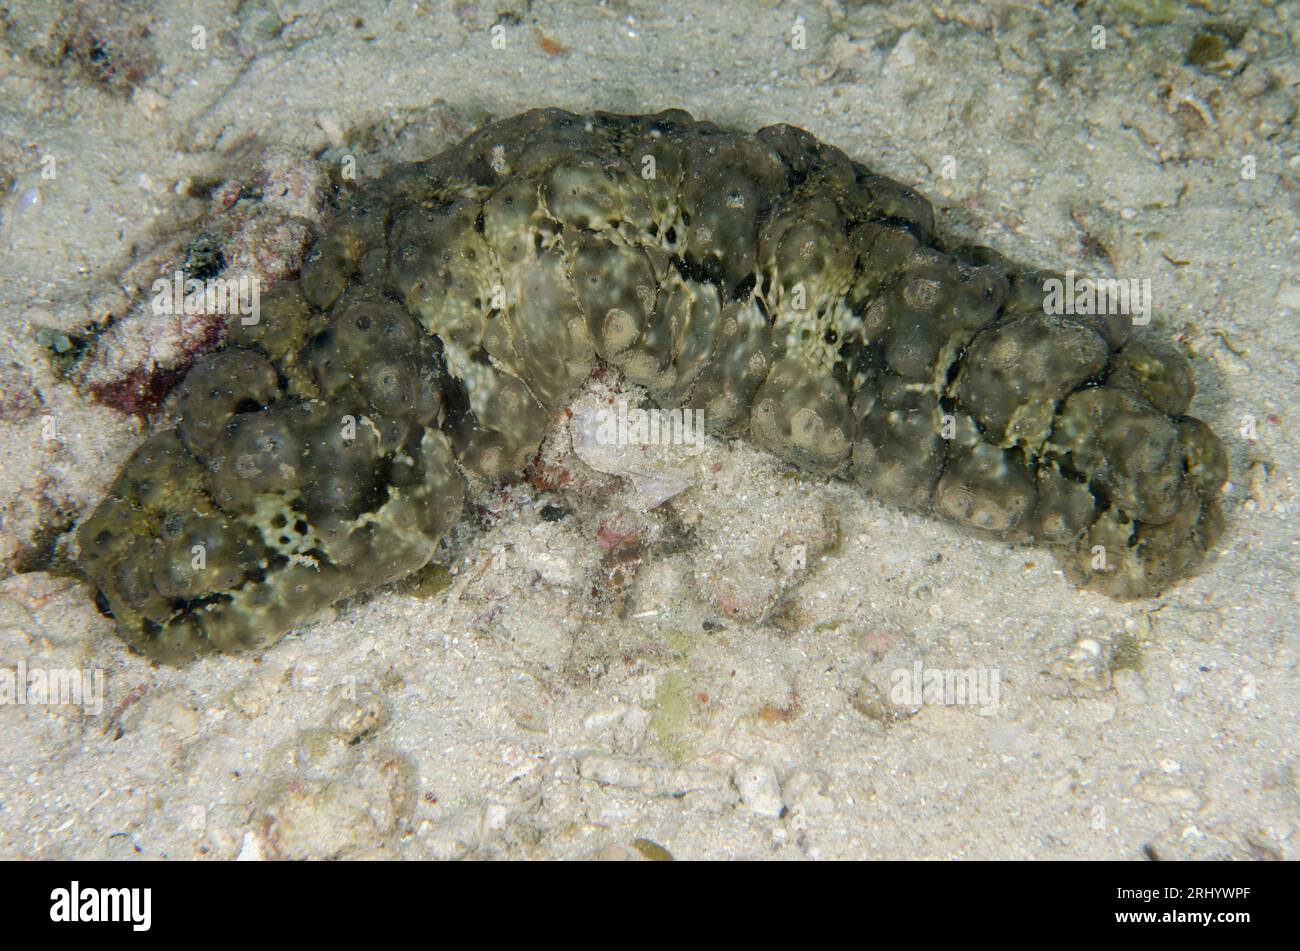 Dragonfish Sea Cucumber, Stichopus horrens, with extended papillae, Cendana Fuel Dump Jetty dive site, Waigeo Island, Aljui Bay, Raja Ampat, West Papu Stock Photo